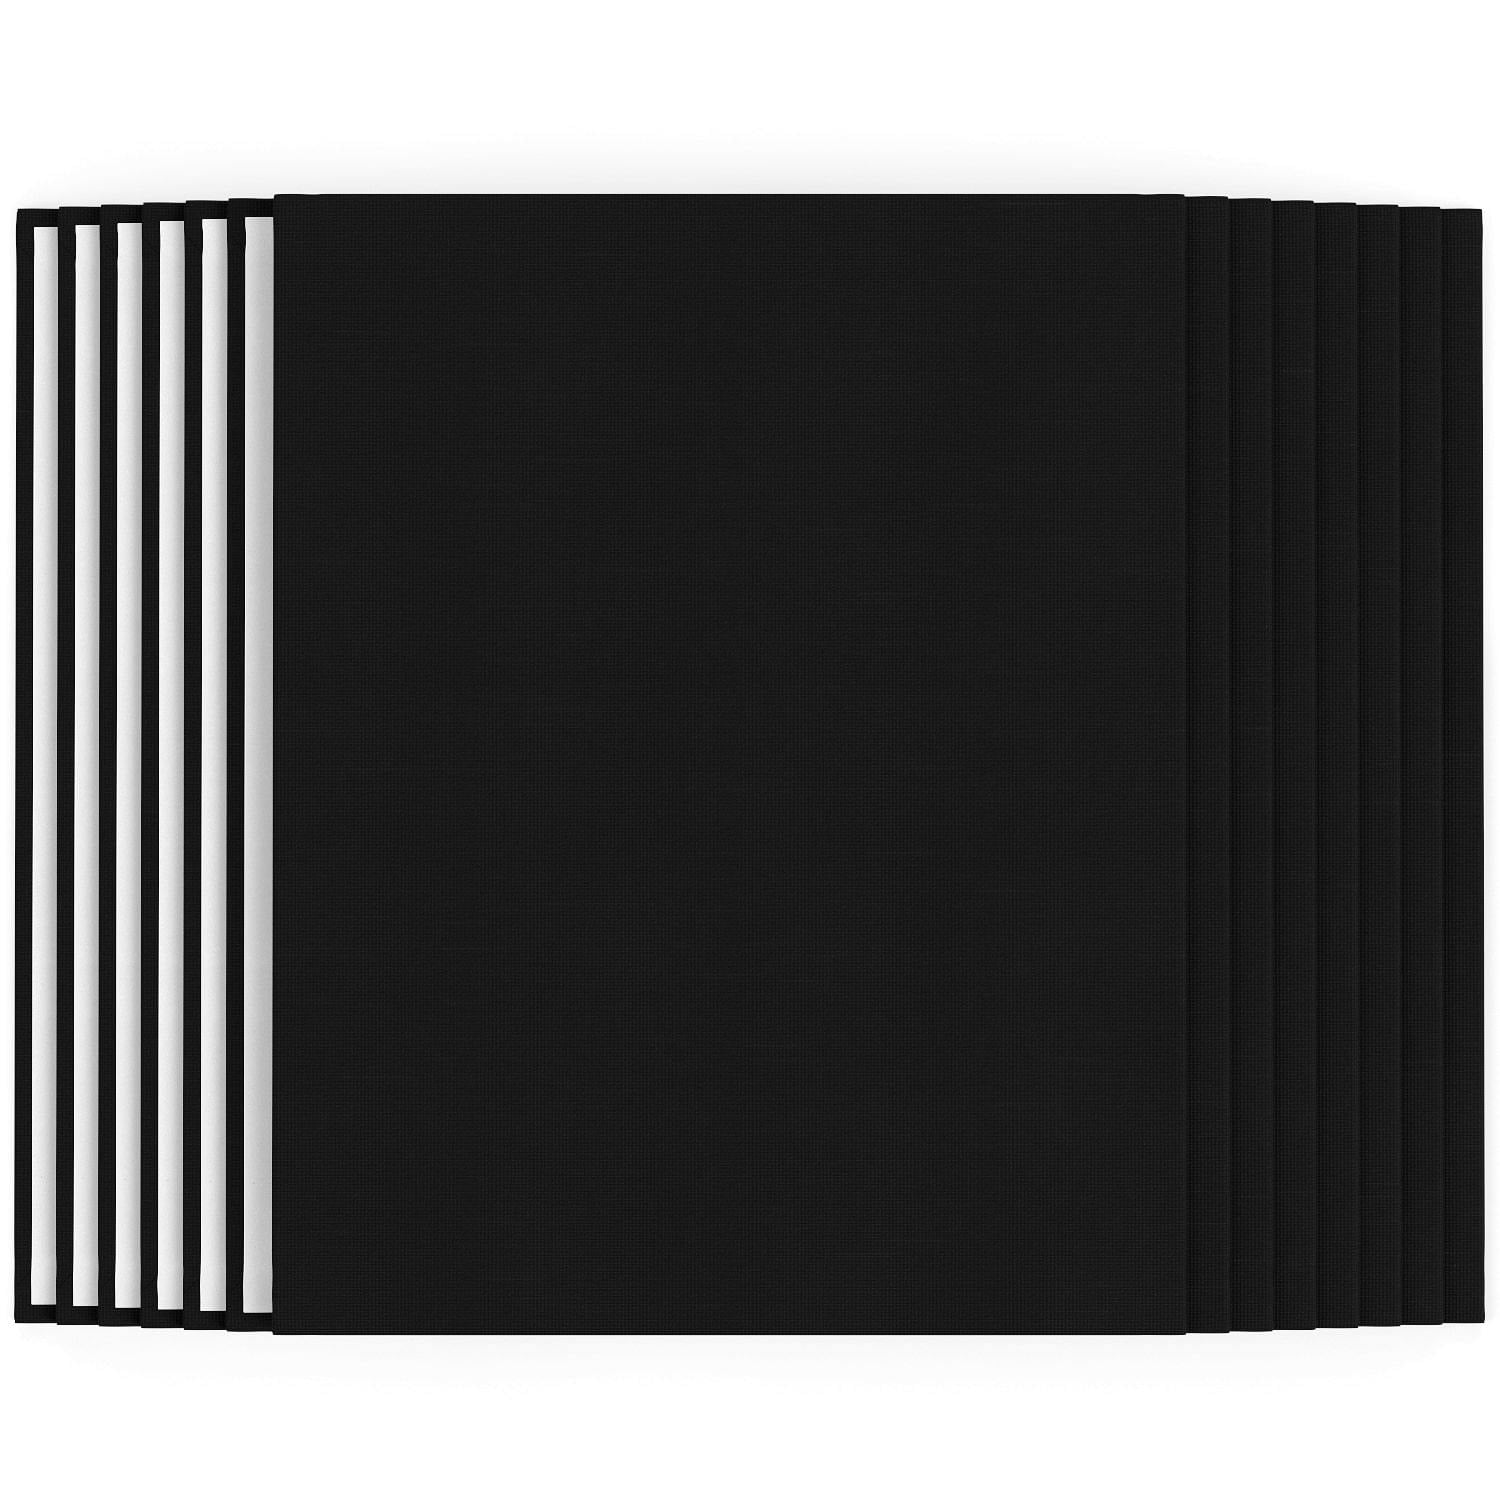 Black Painting Canvas Panels  4x4, 6x6, 8x8, 10x10, 12x12 inch (5 Eac -  Chalkola Art Supply